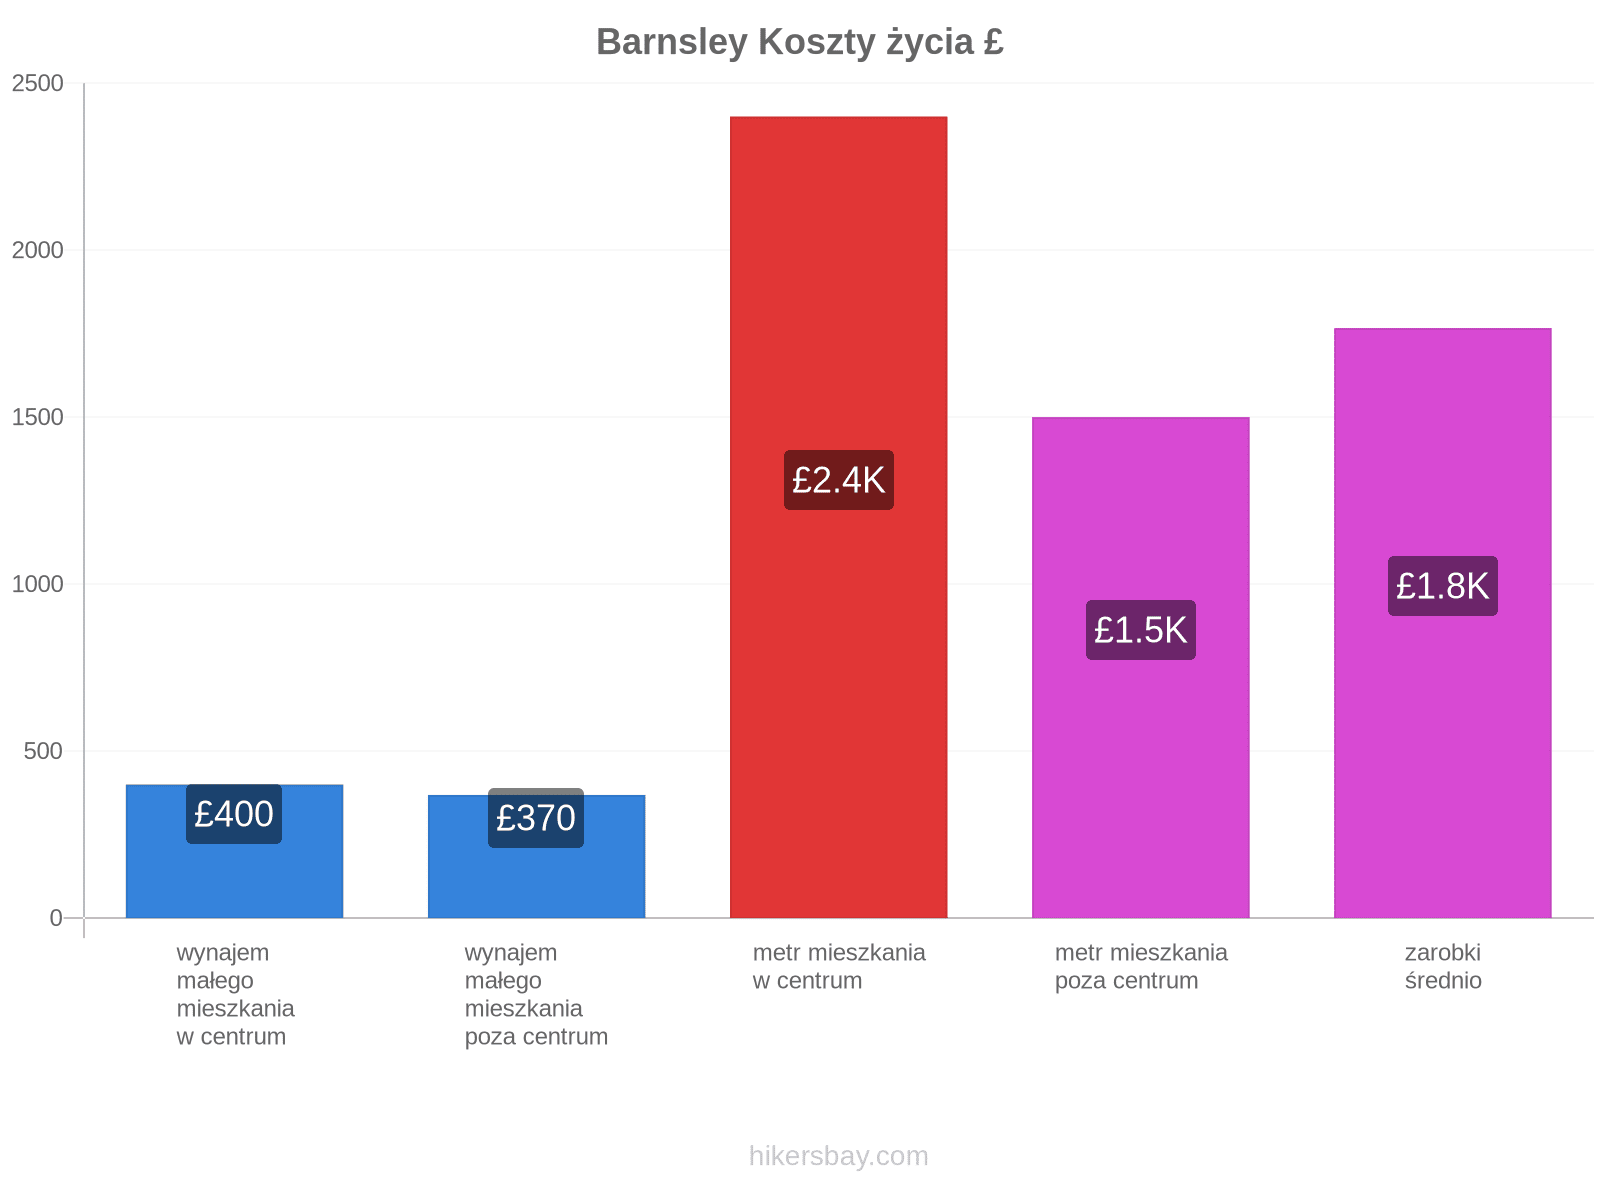 Barnsley koszty życia hikersbay.com